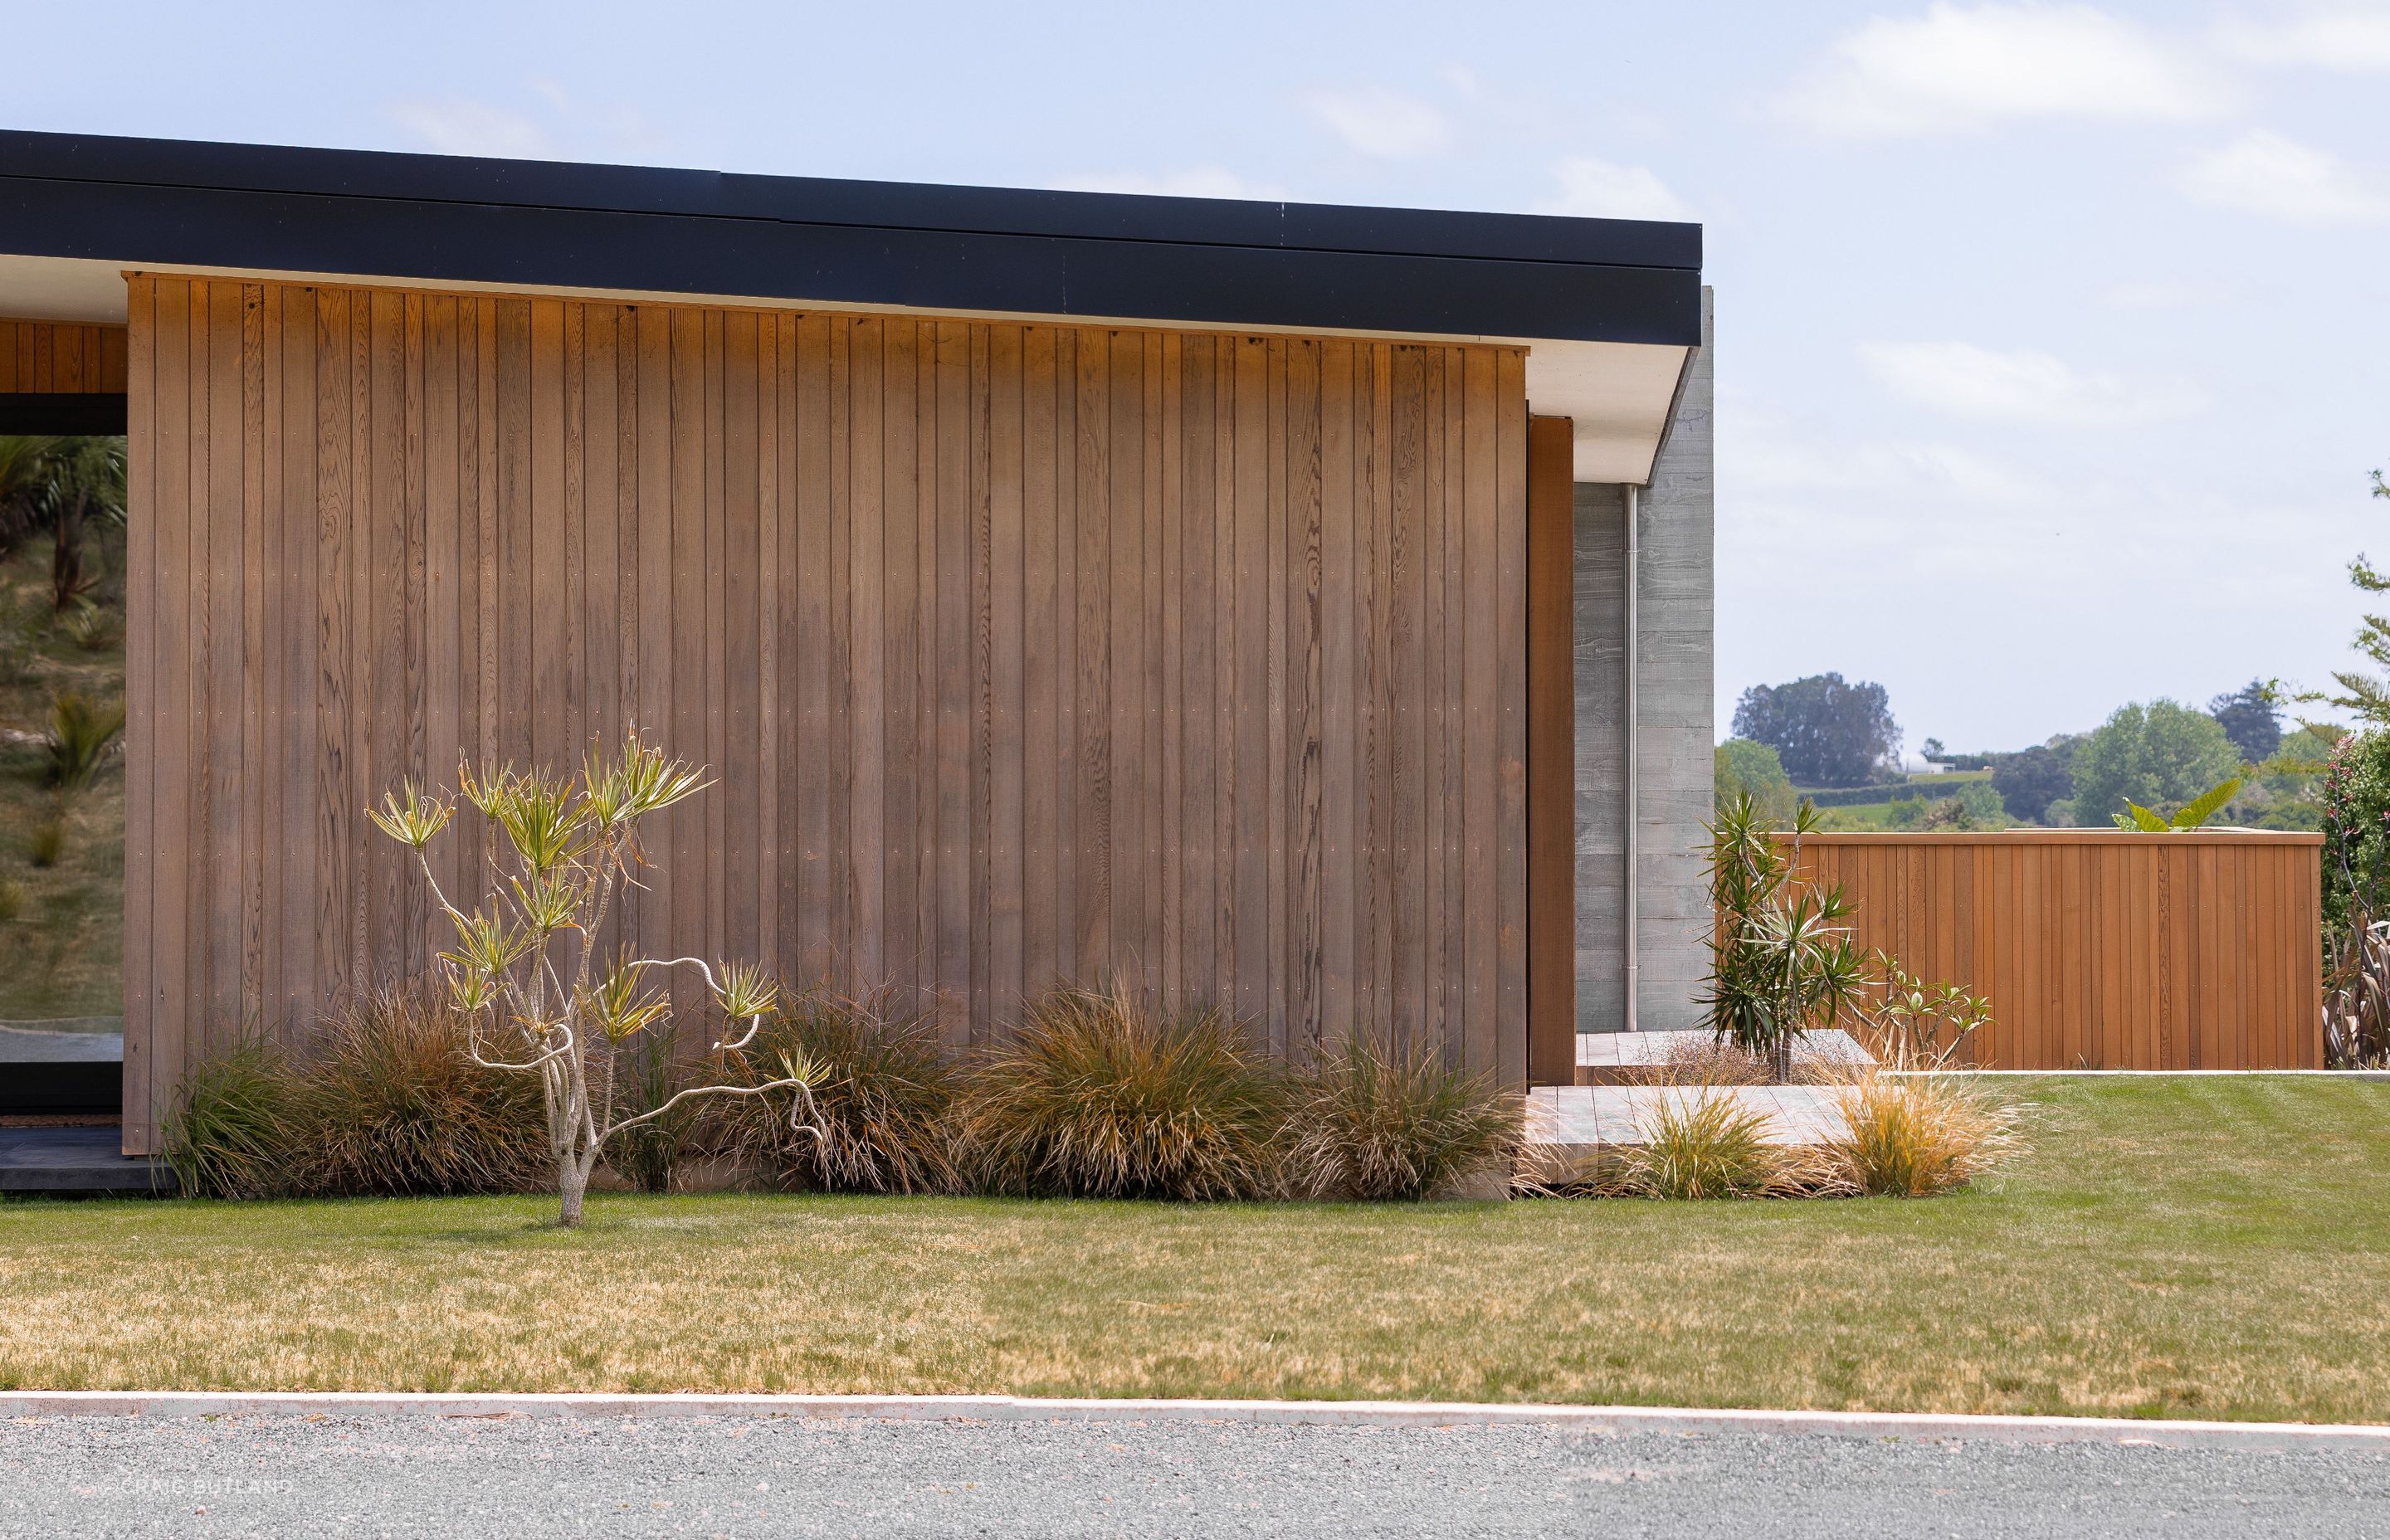 Random width vertical cedar weatherboards feature against the Insitu-concrete elements.